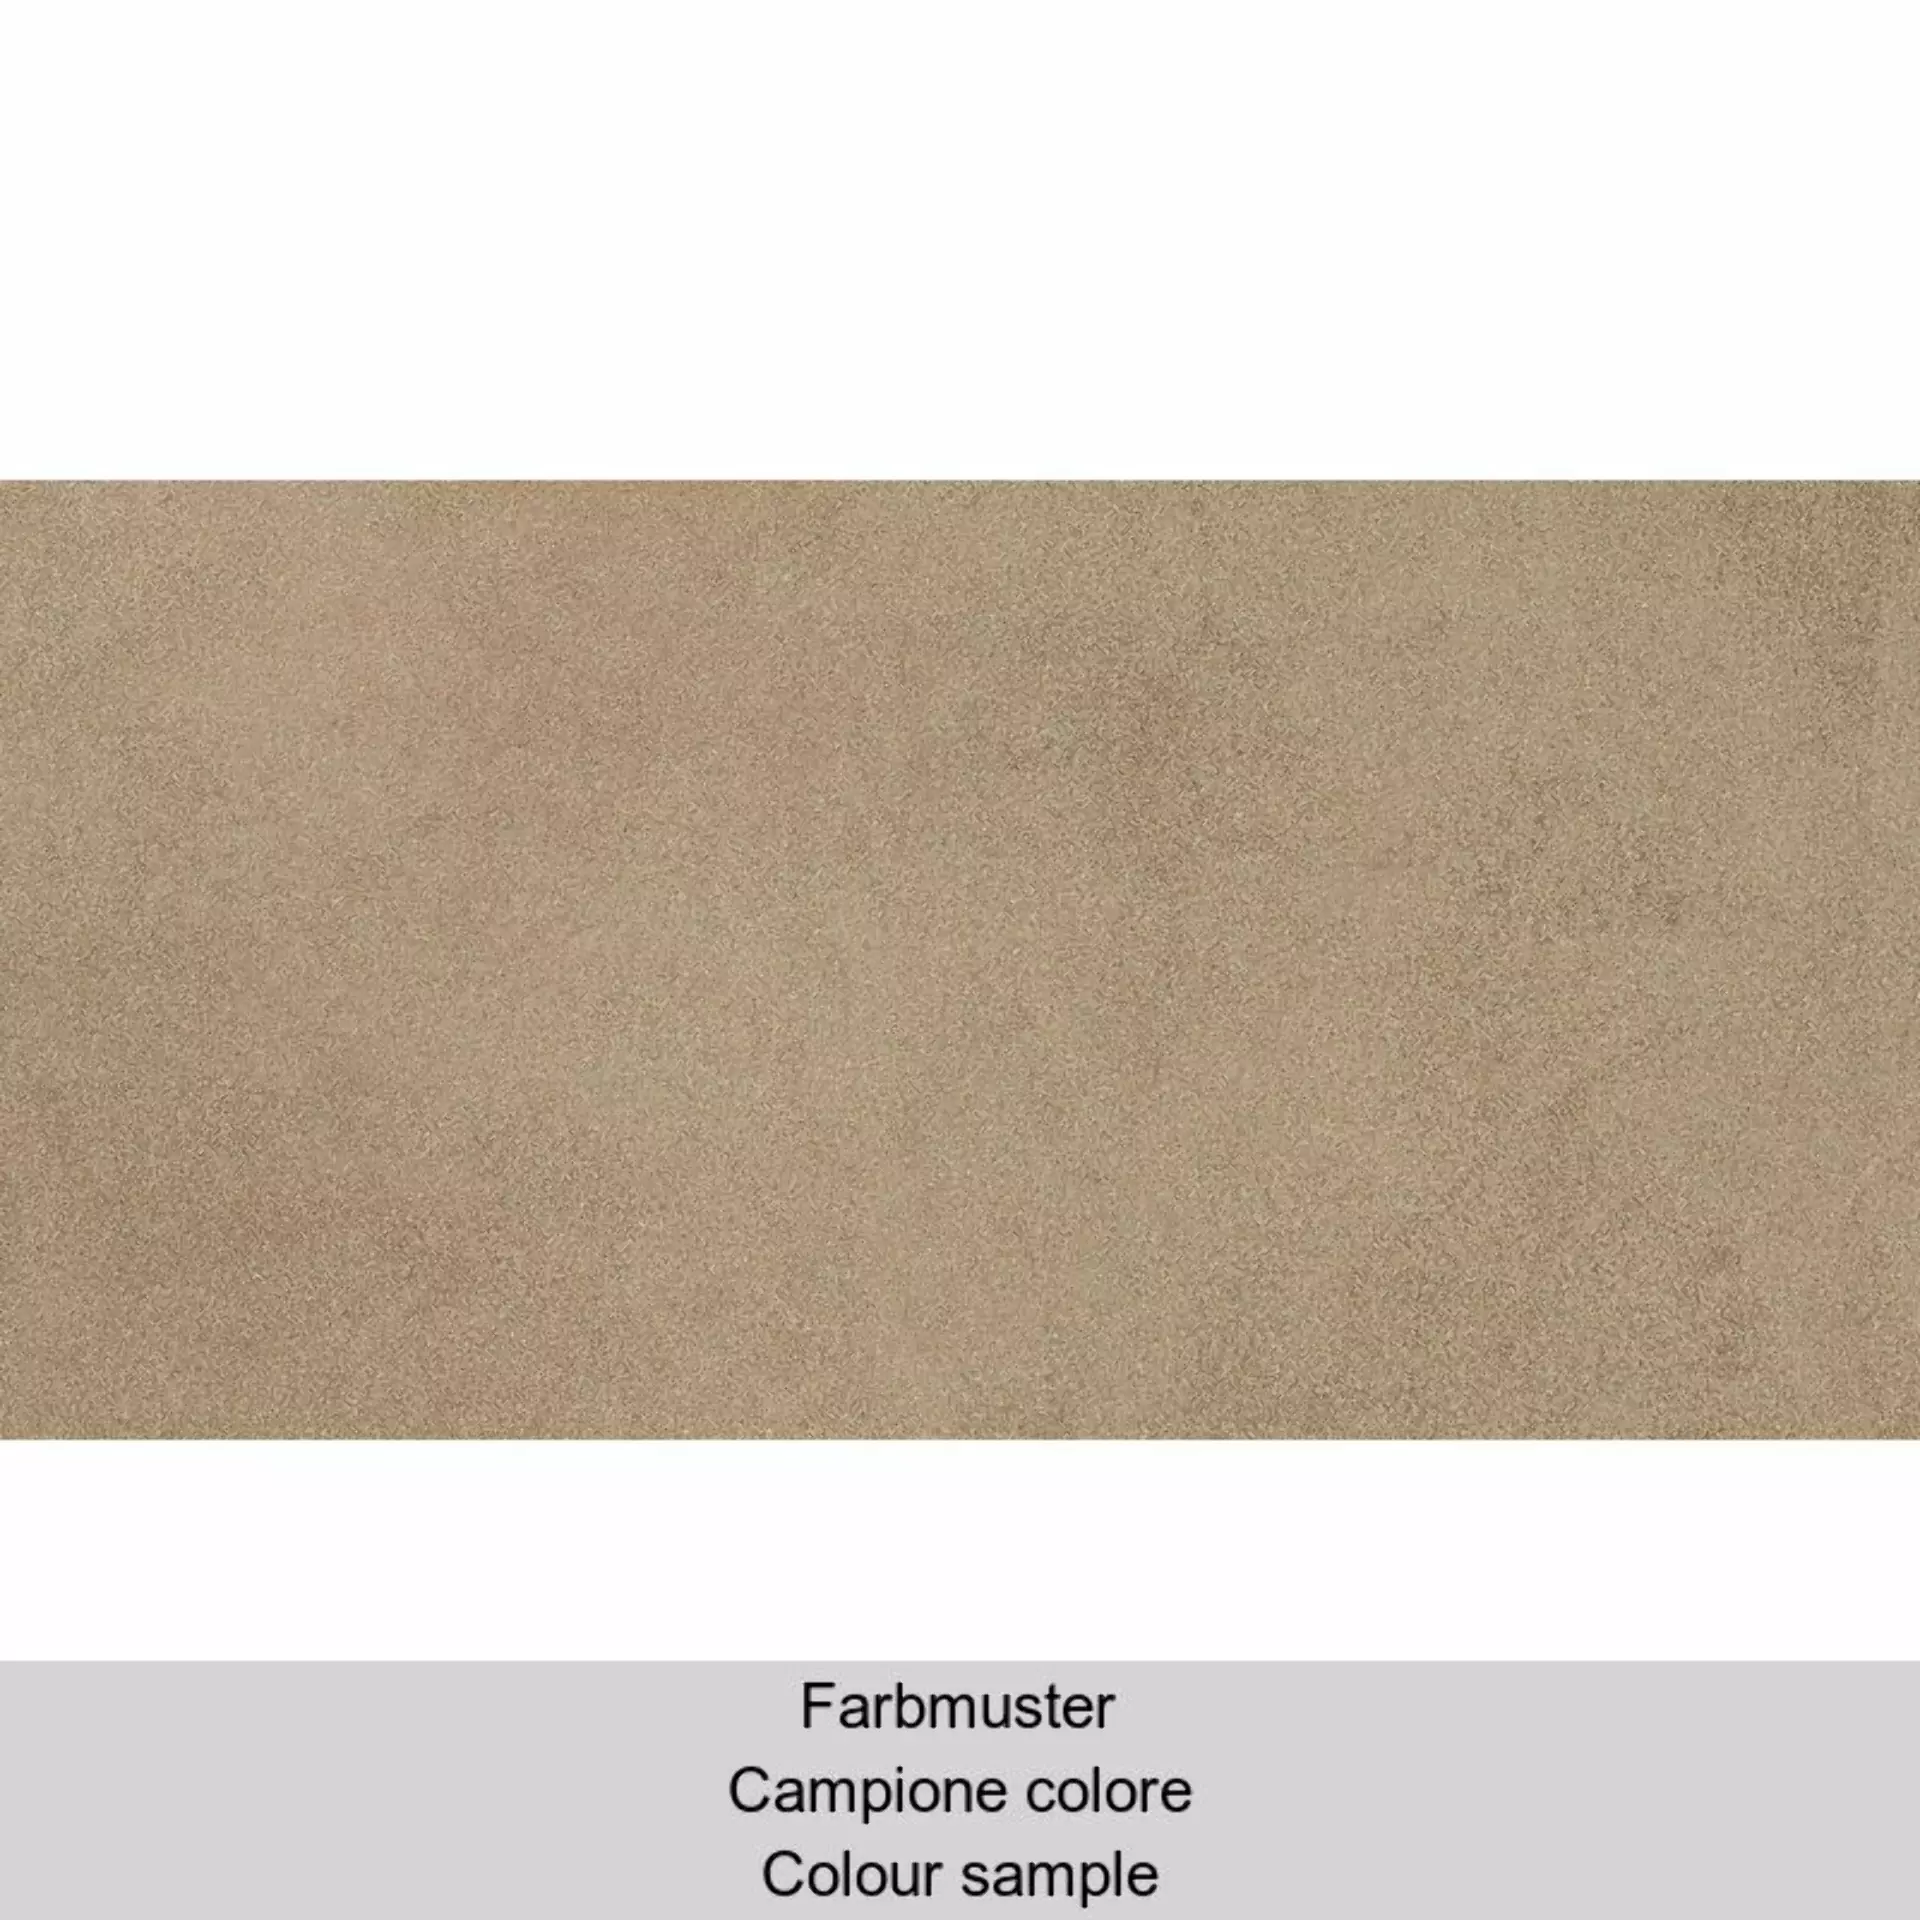 Casalgrande Pietre Etrusche Pitigliano Naturale – Matt – Antibacterial 7795781 30x60cm rectified 9mm